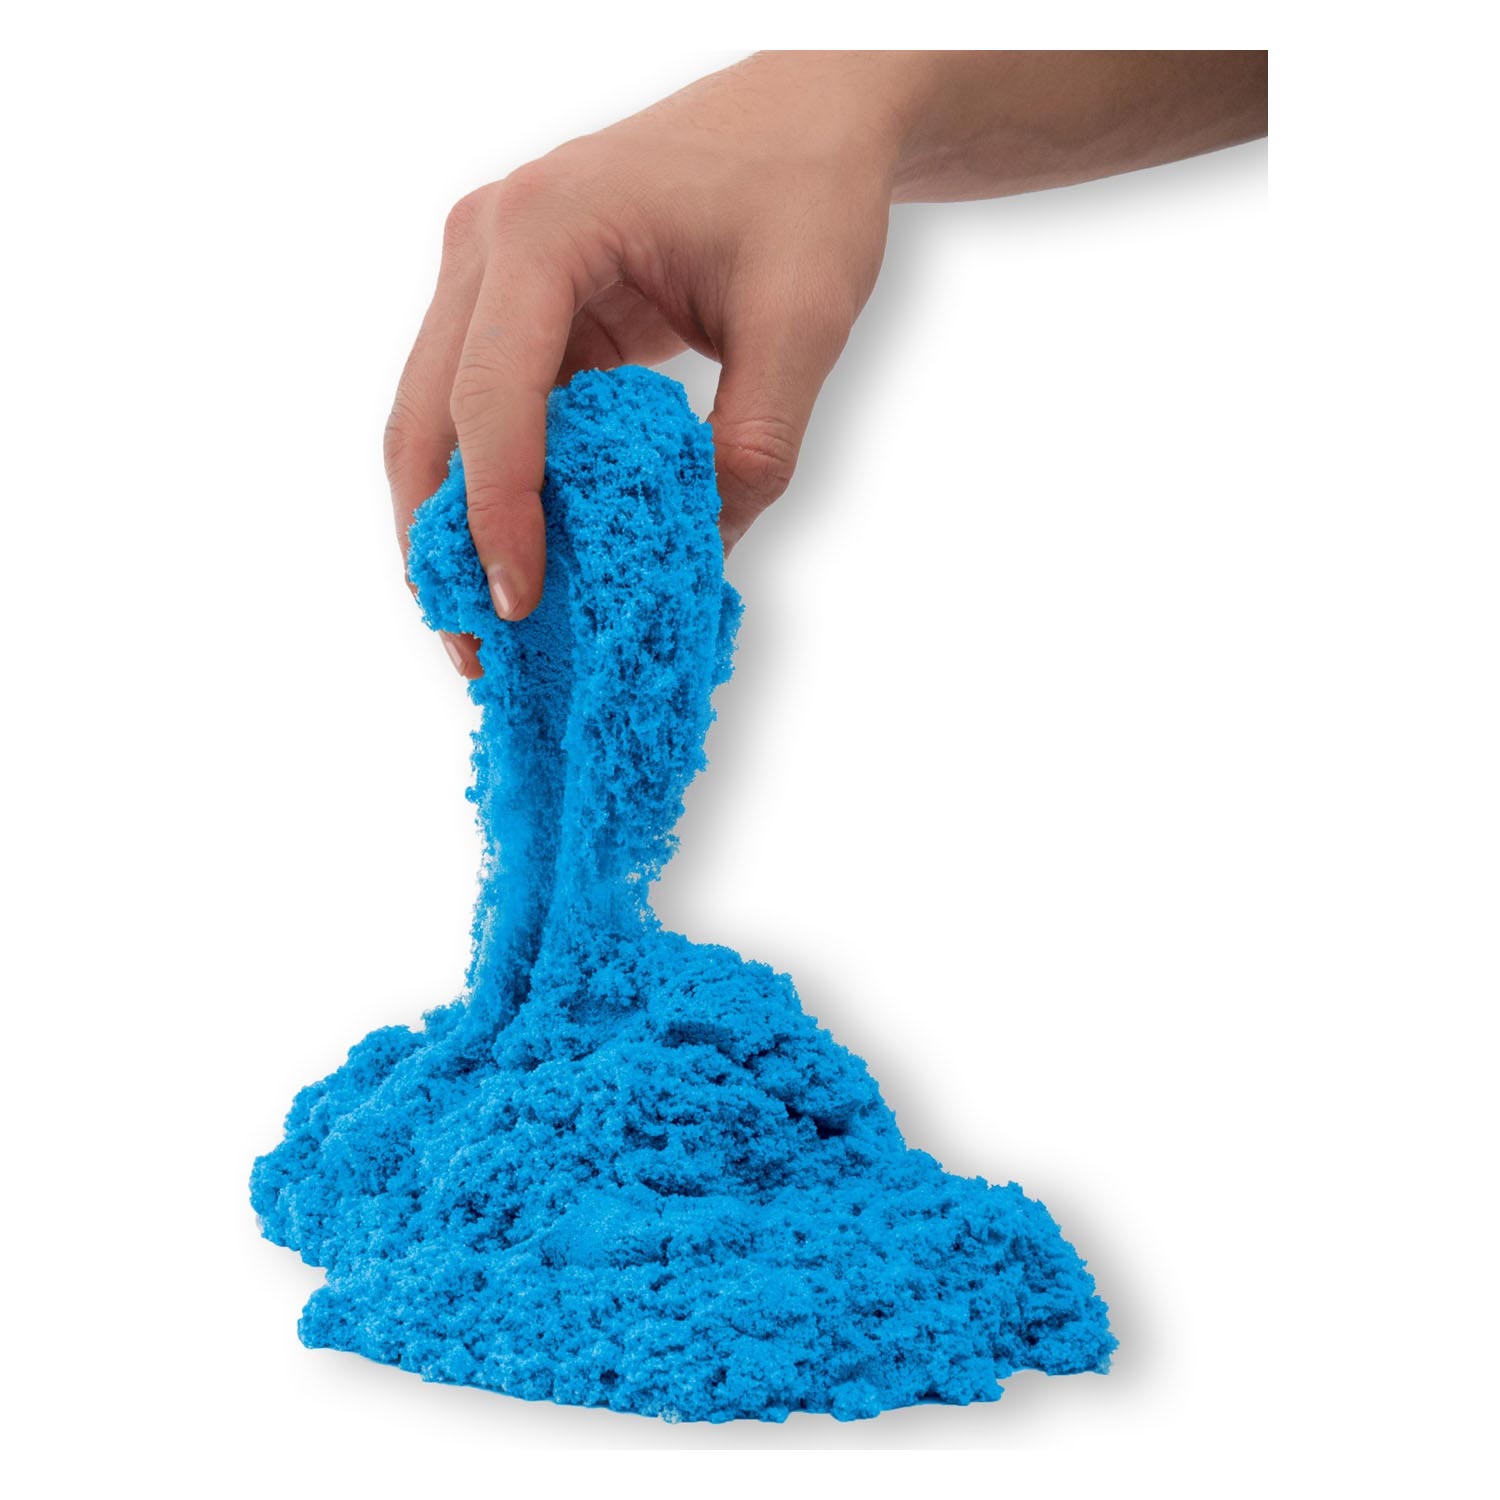 Kinetic Sand - Bleu scintillant, 907gr.